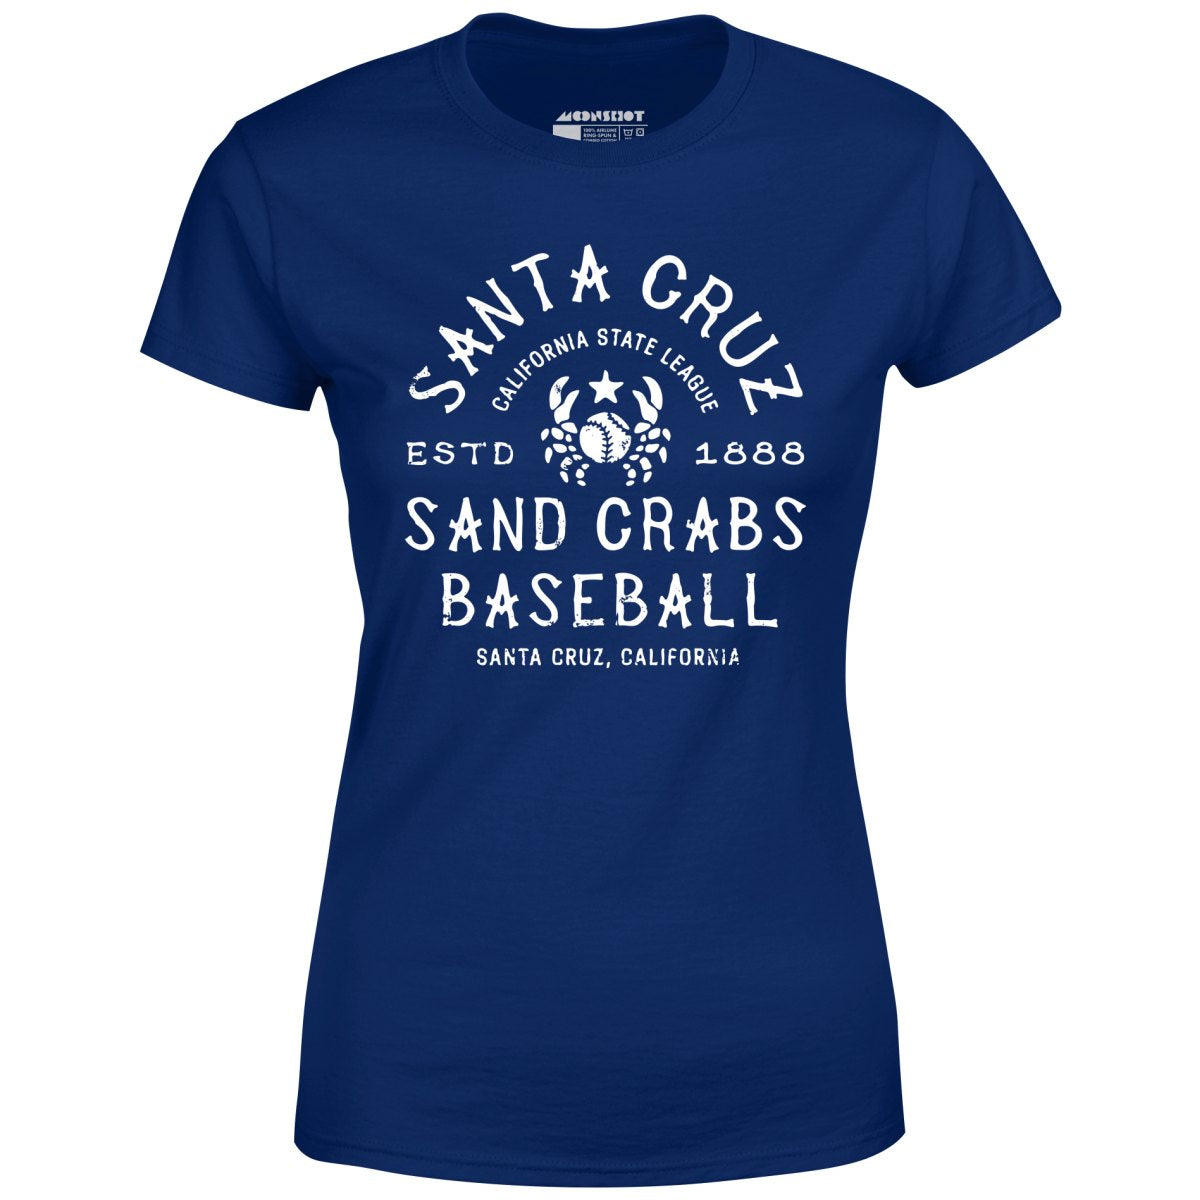 Santa Cruz Sand Crabs - California - Vintage Defunct Baseball Teams - Women's T-Shirt